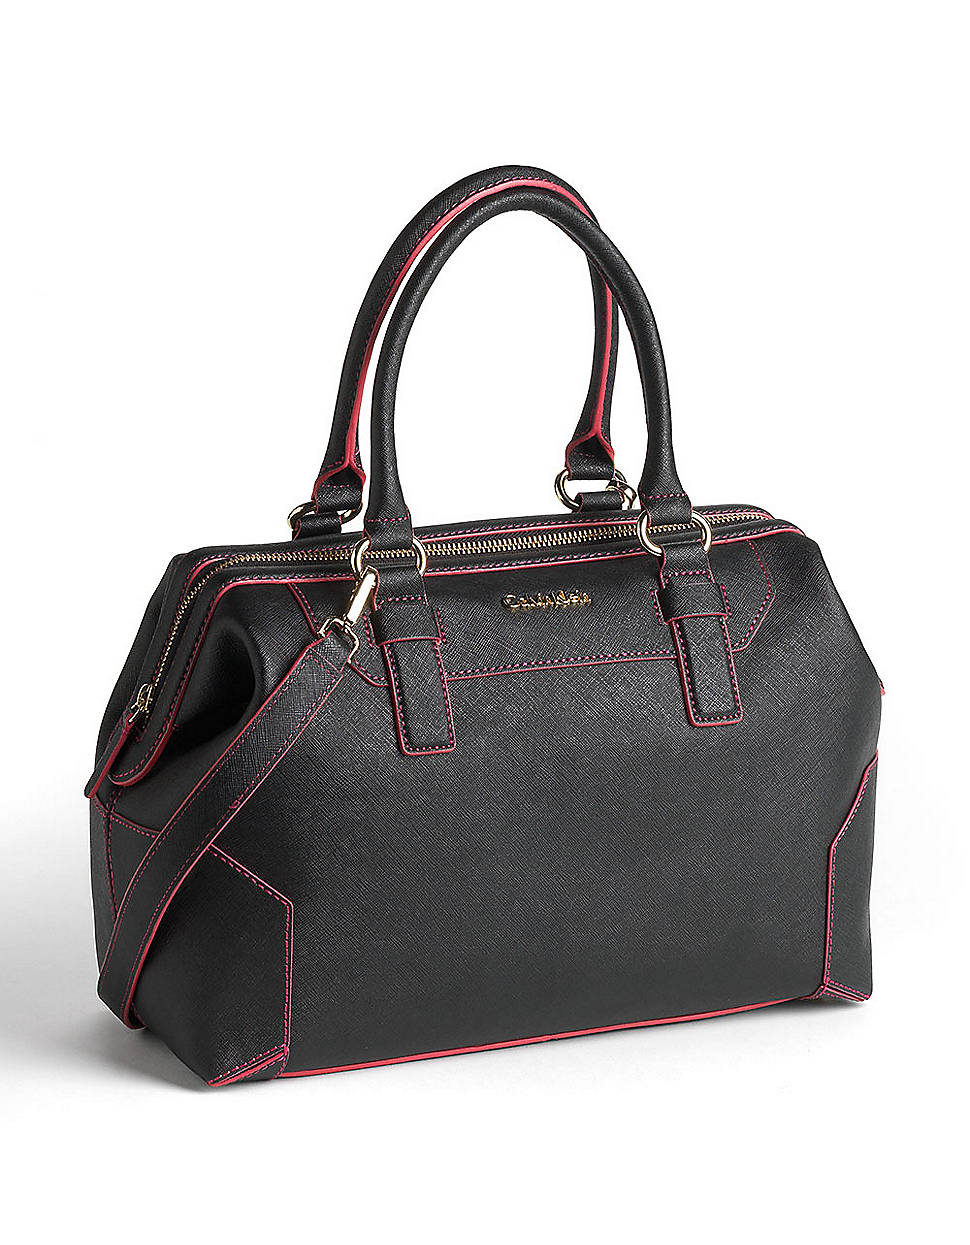 Lyst - Calvin Klein Saffiano Leather Satchel Bag in Black